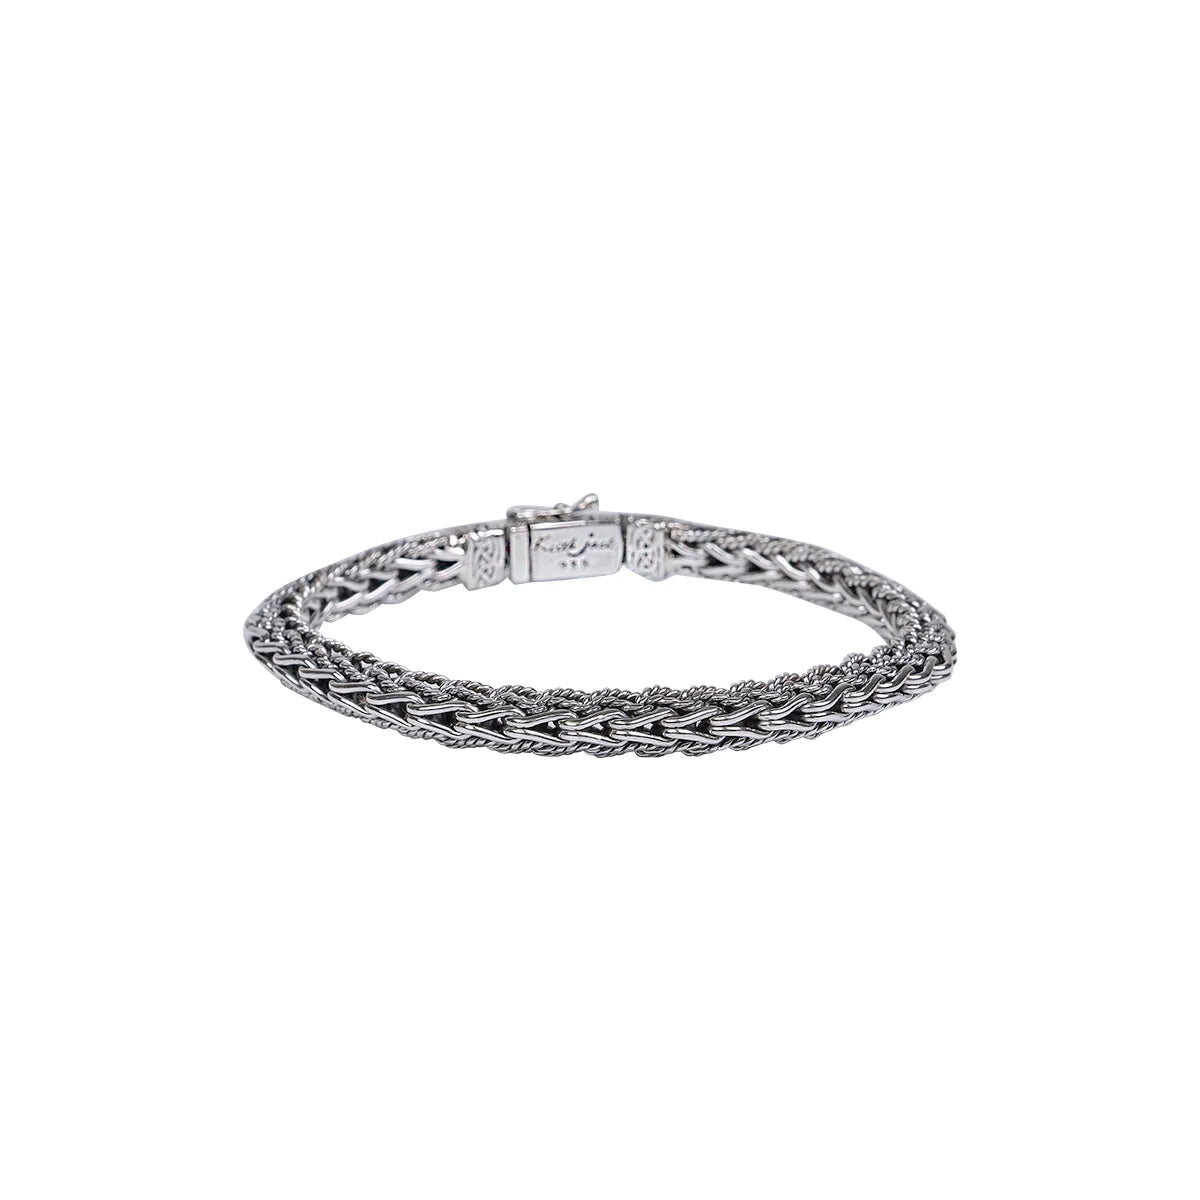 Silver Triangular Bracelet - 7.5" length